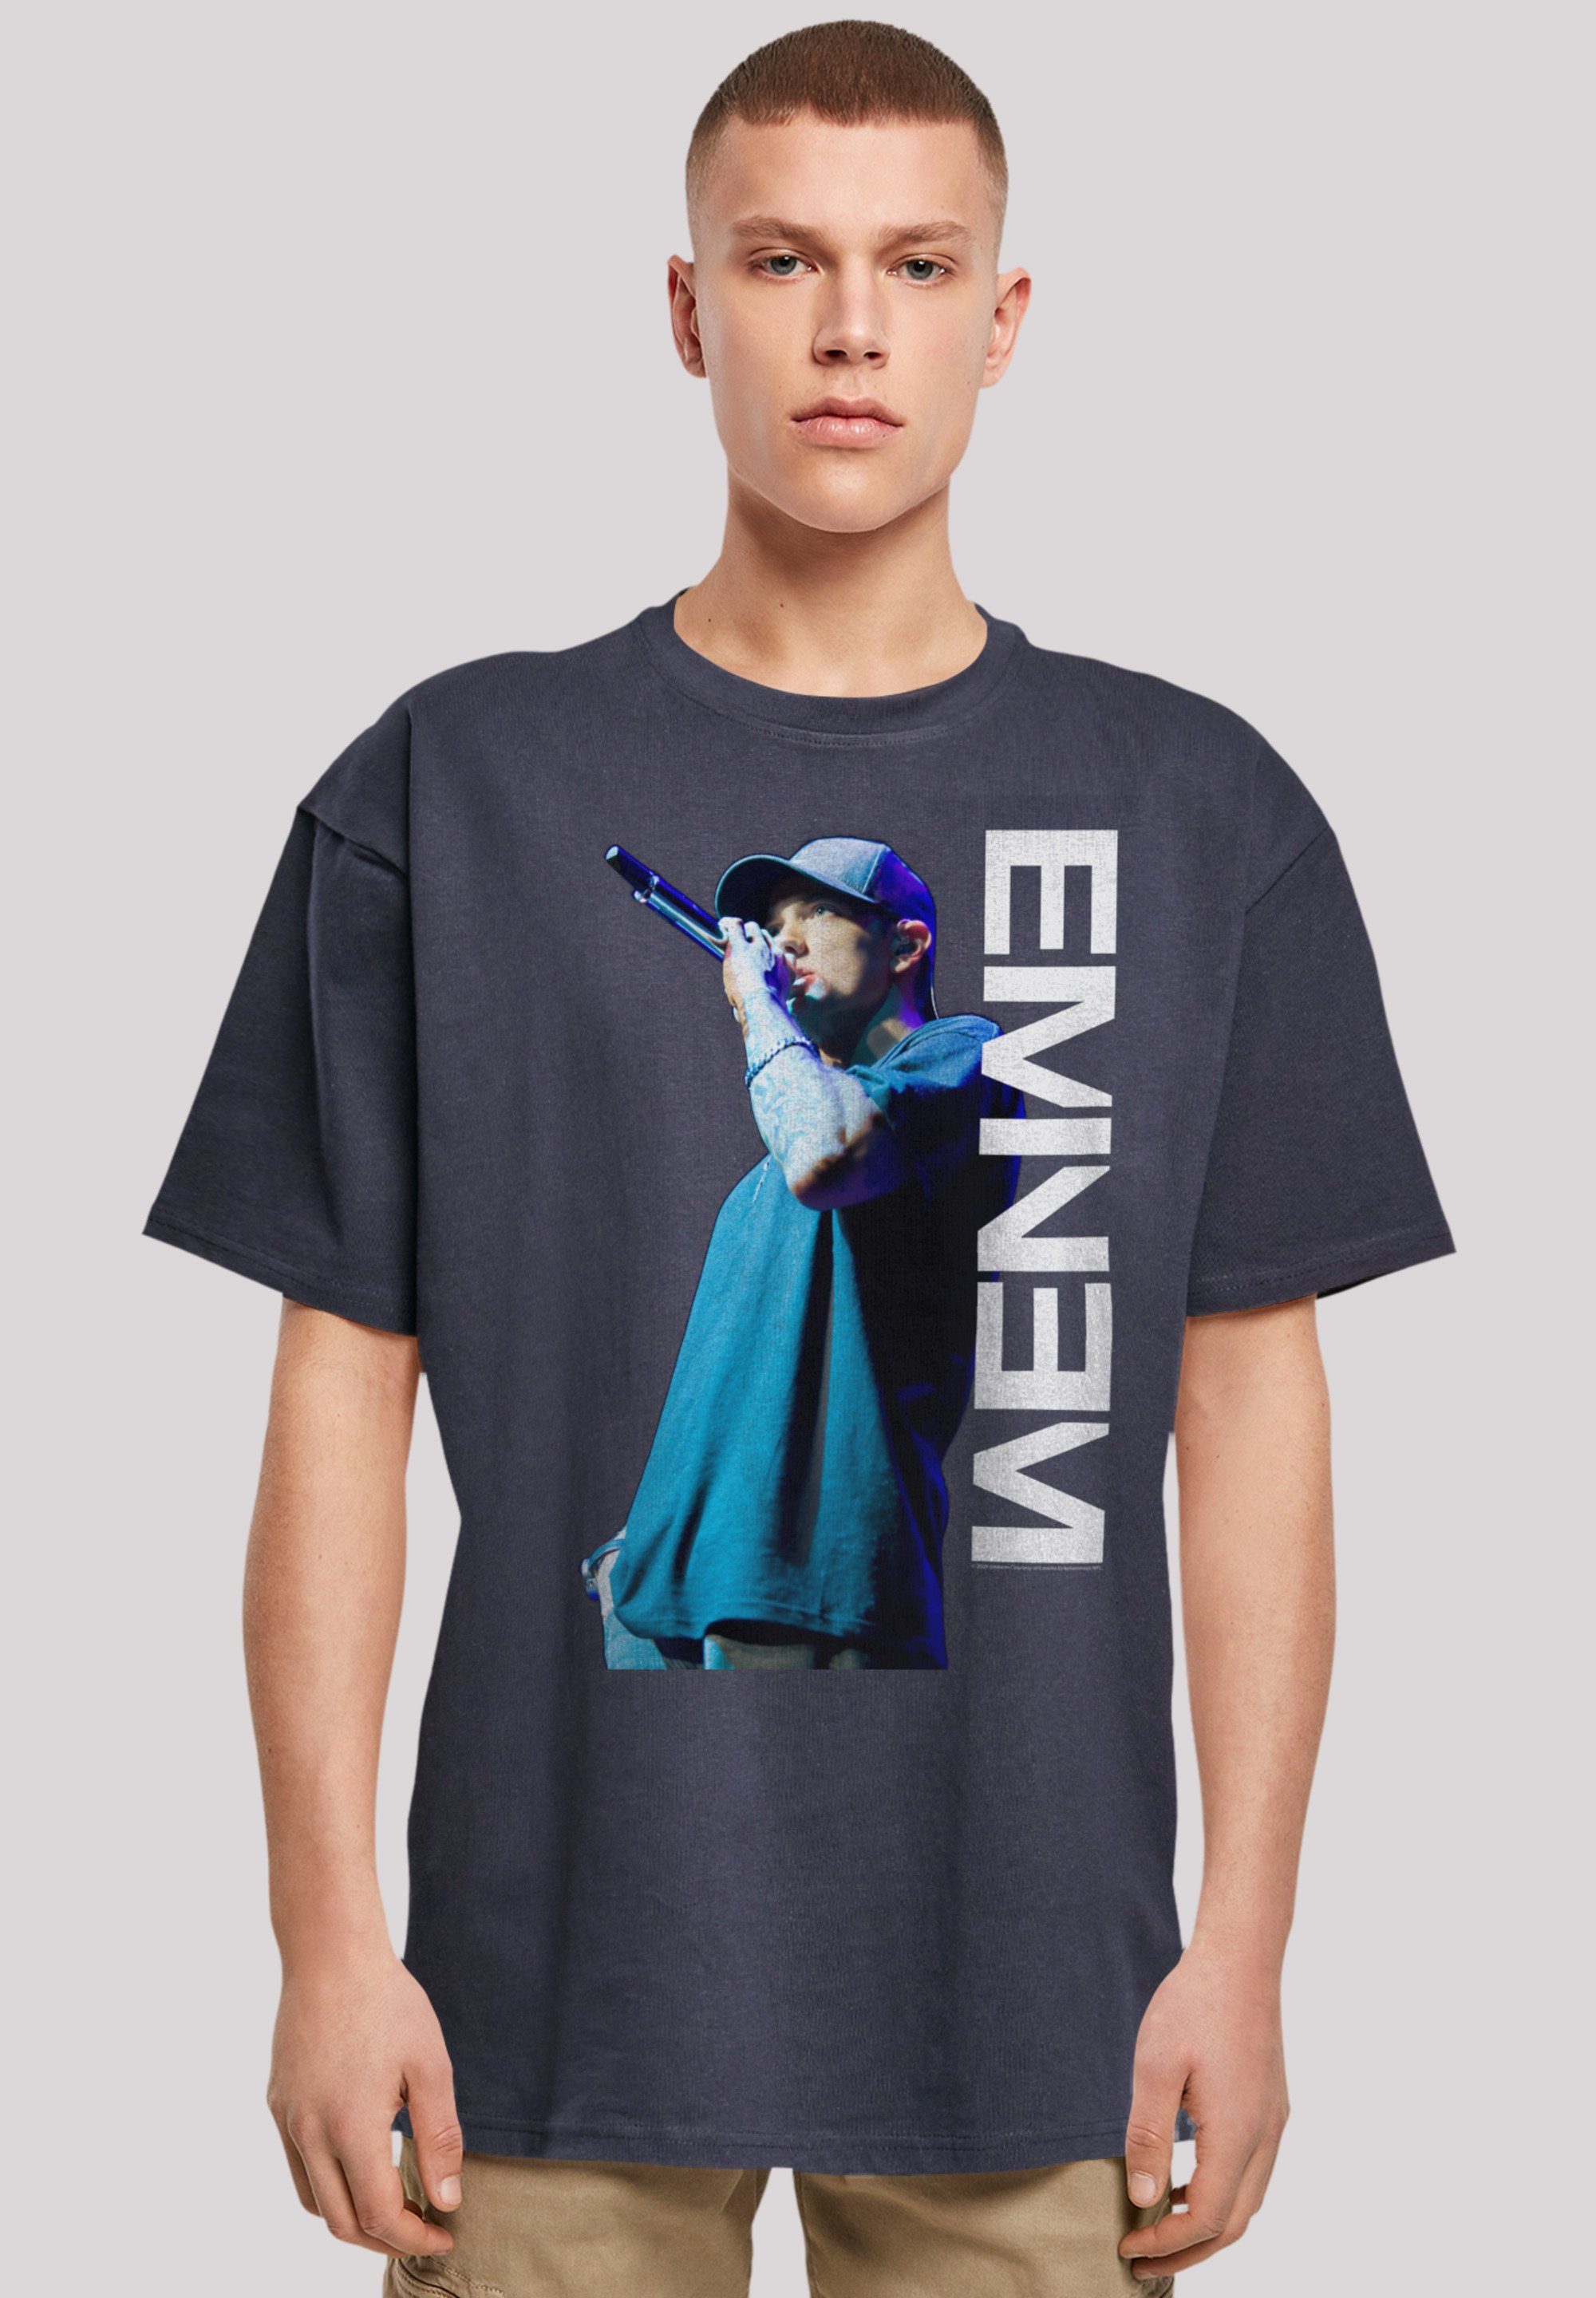 F4NT4STIC T-Shirt Eminem Mic Pose Hip Hop Rap Music Premium Qualität, Musik navy